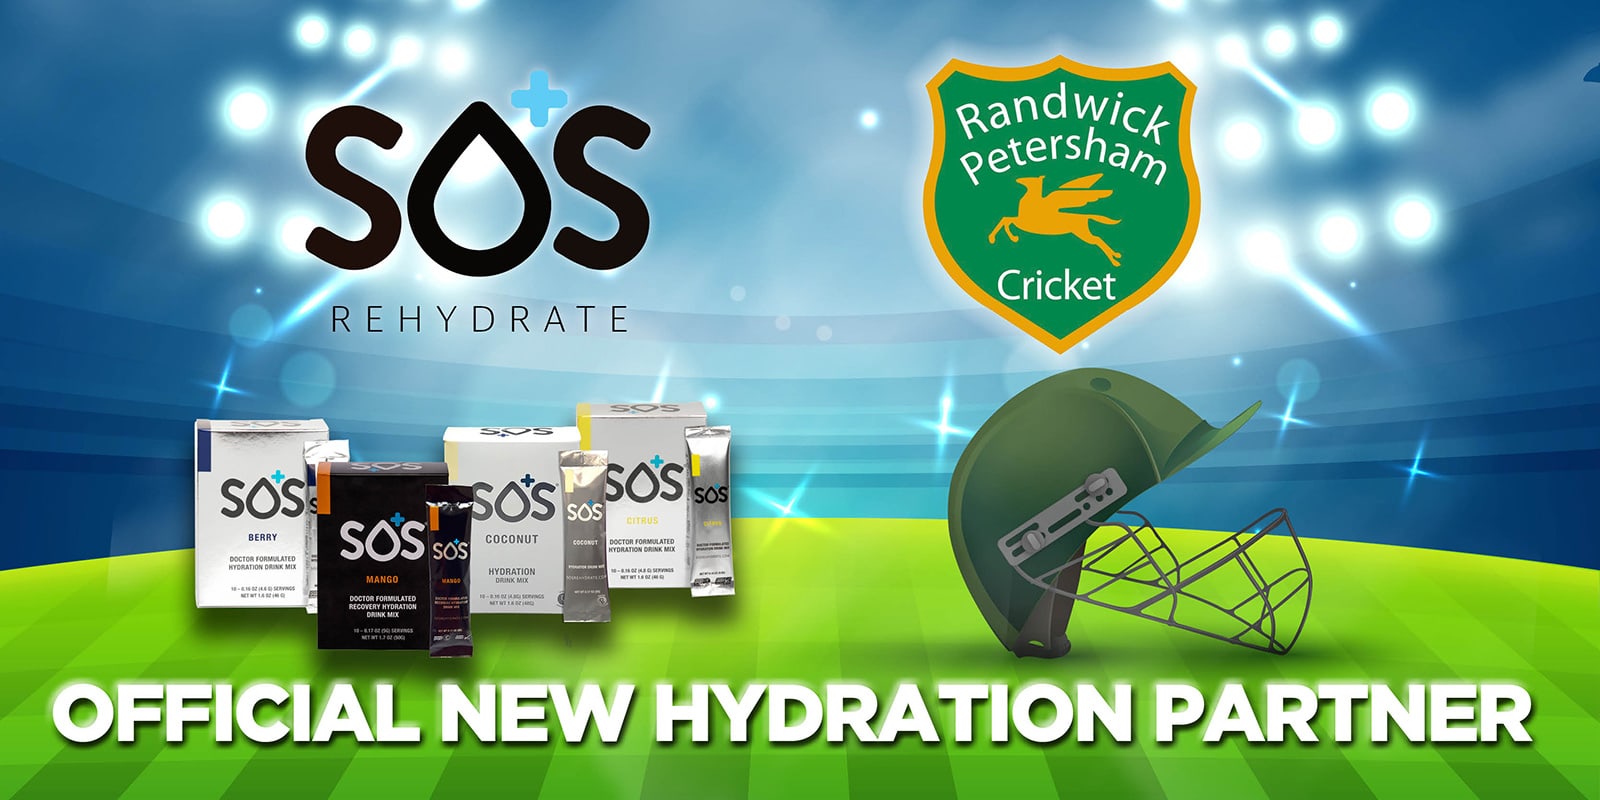 Petersham Cricket Hydration Partner